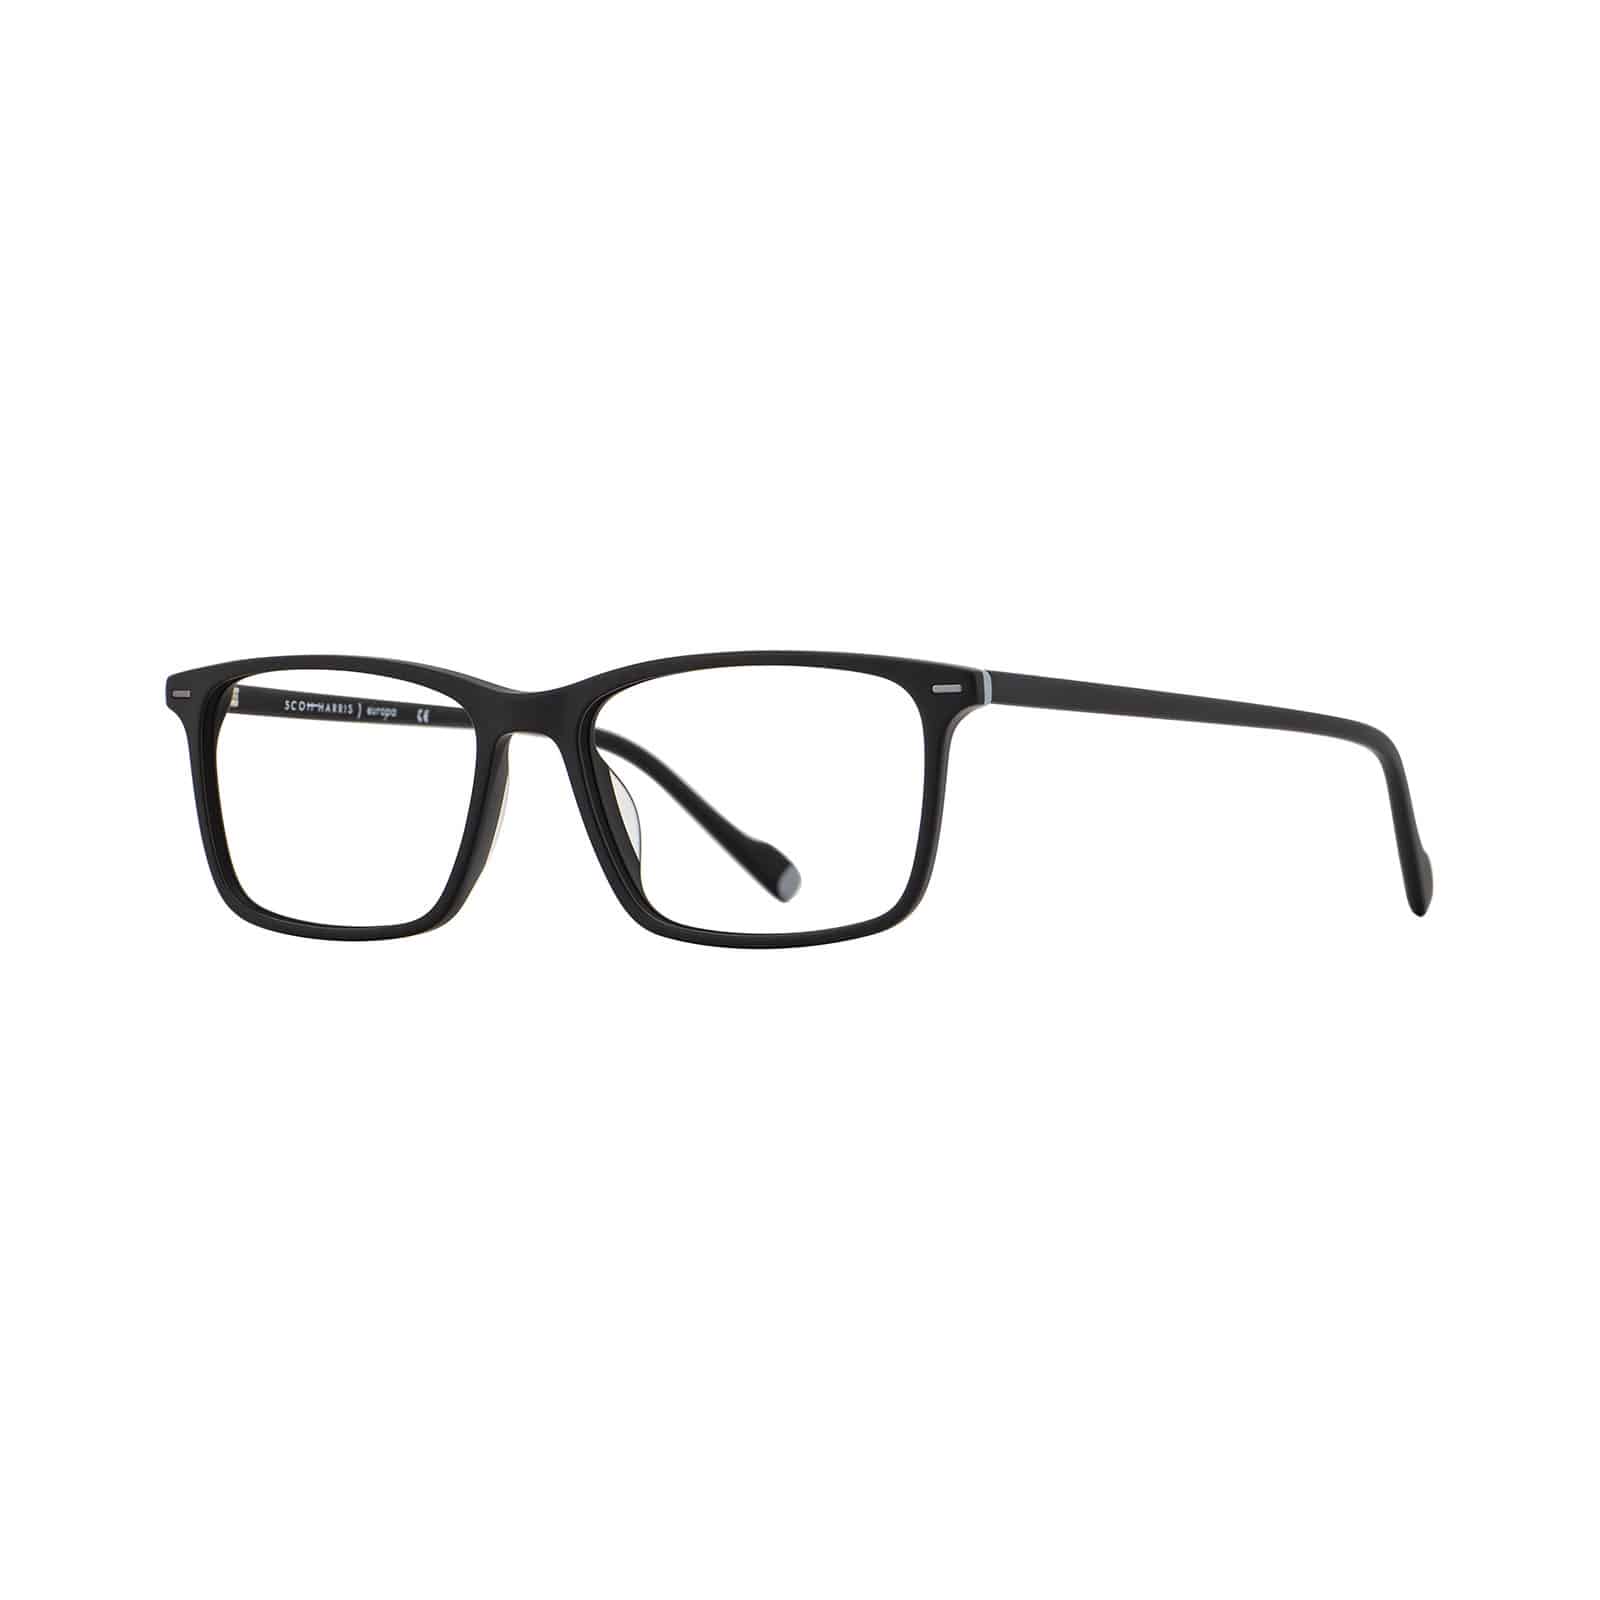 Scott Harris Eyewear Collection - Volunteer Eyecare